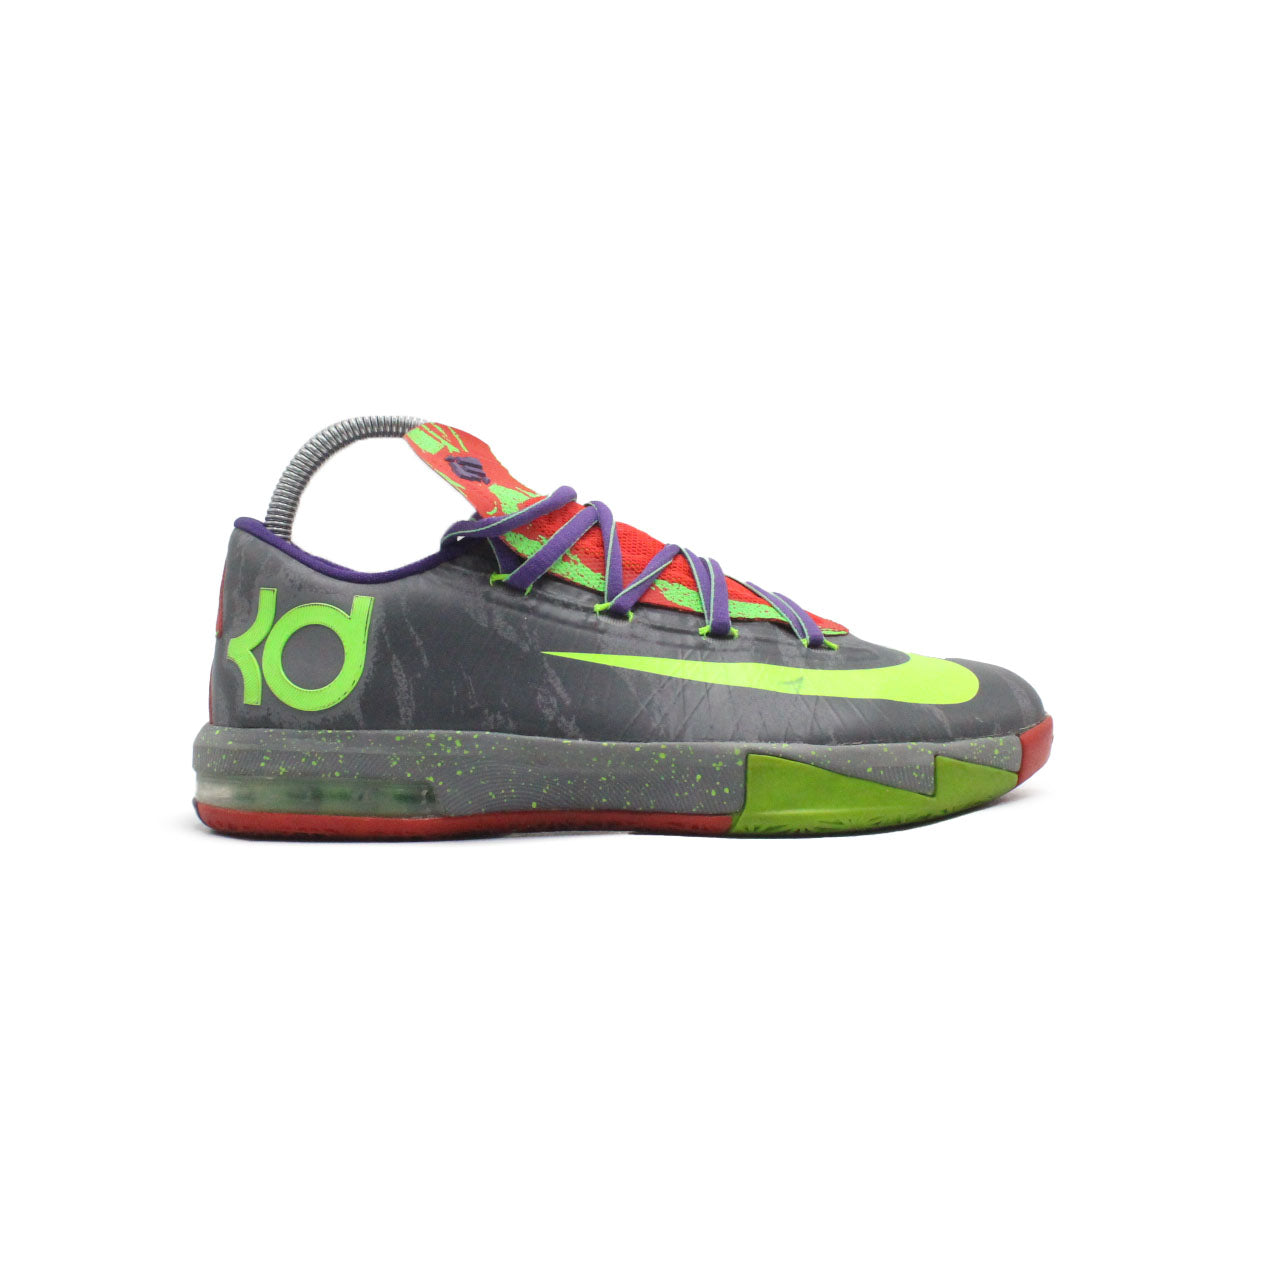 Nike KD 6 Kevin Durant Basketball Shoe